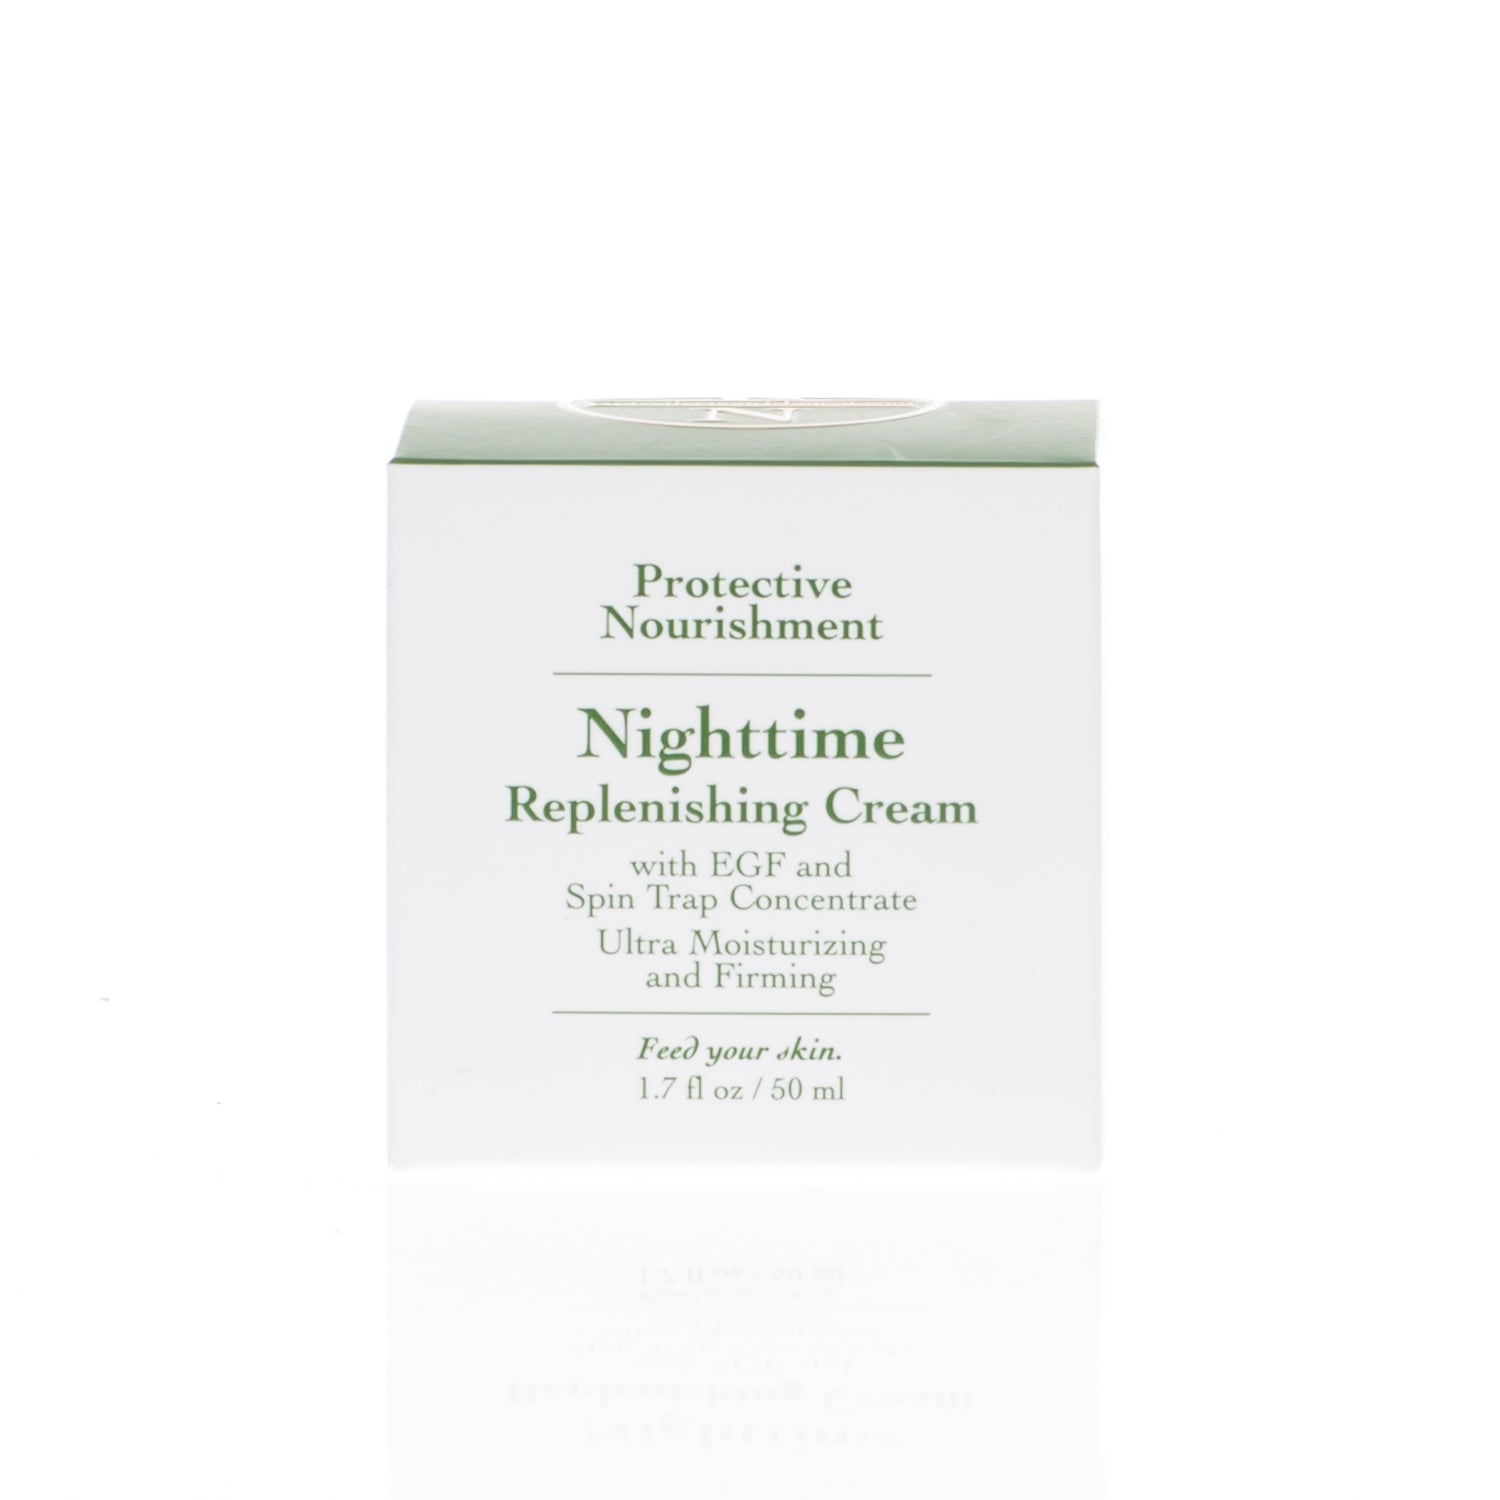 Nighttime Replenishing Cream - Protective Nourishment